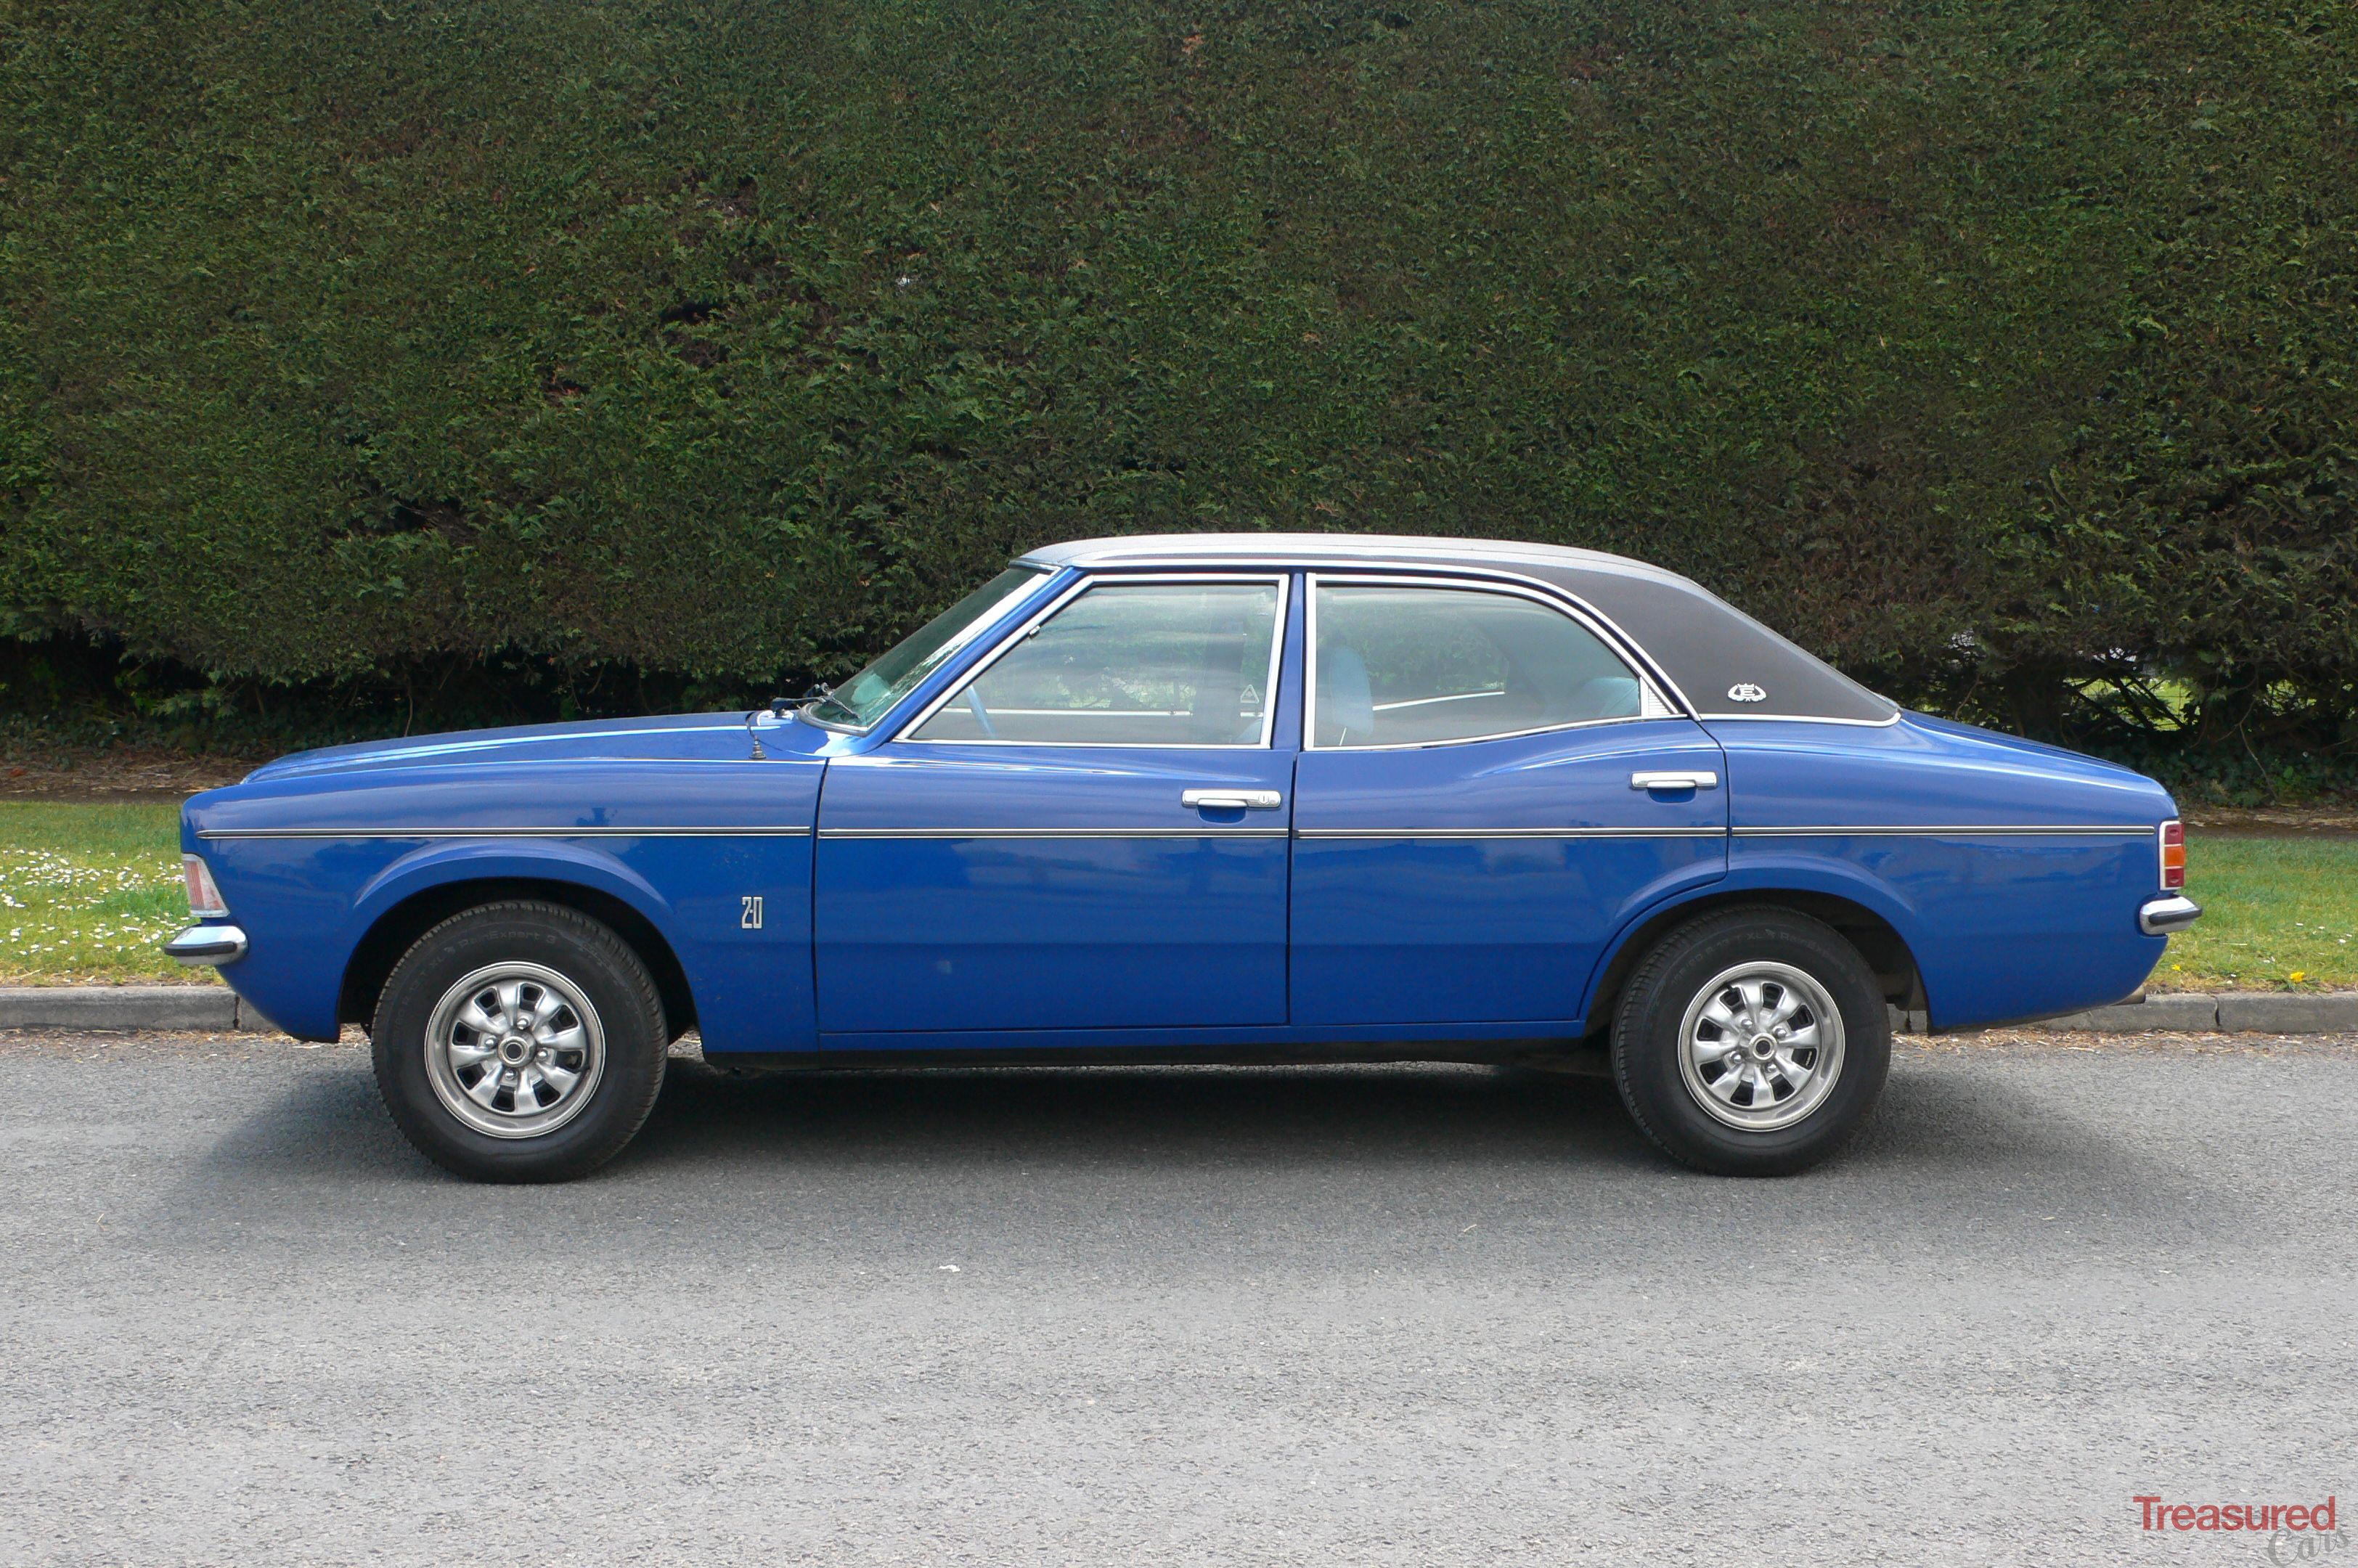 1976 Ford Cortina 2000E Mk3 Classic Cars for sale - Treasured Cars